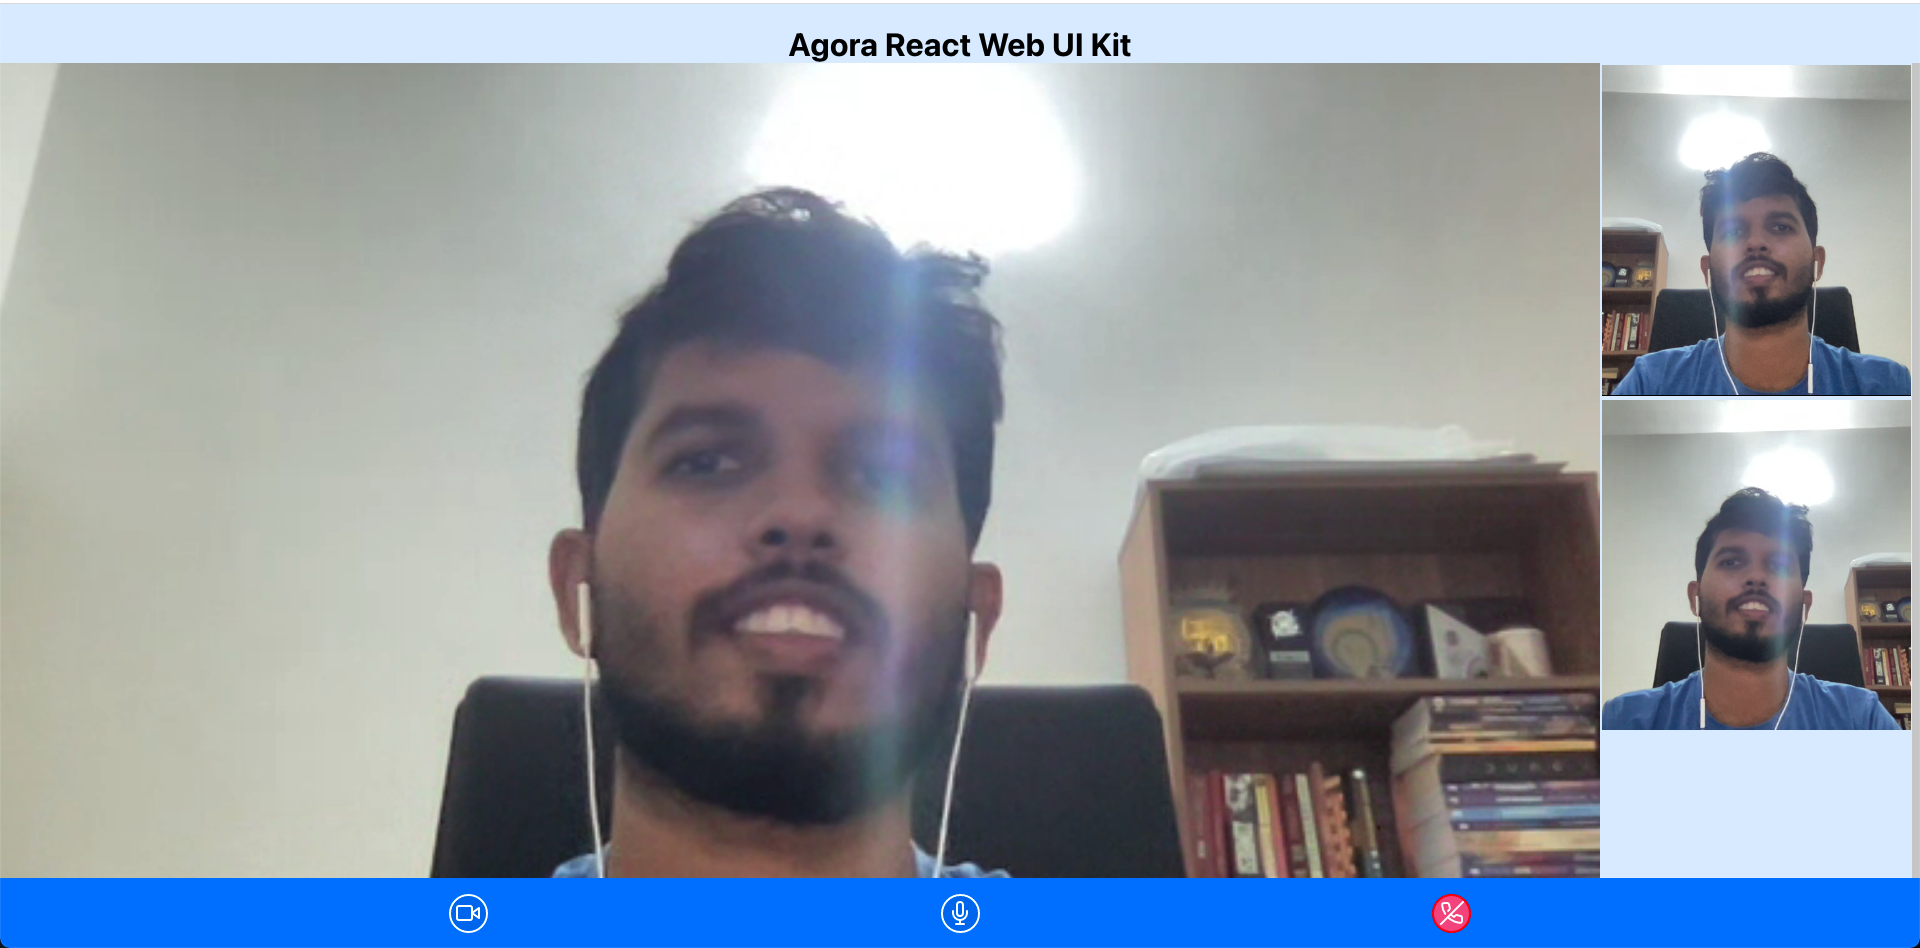 Create Your Own Agora Application using Agora React Web UIKit